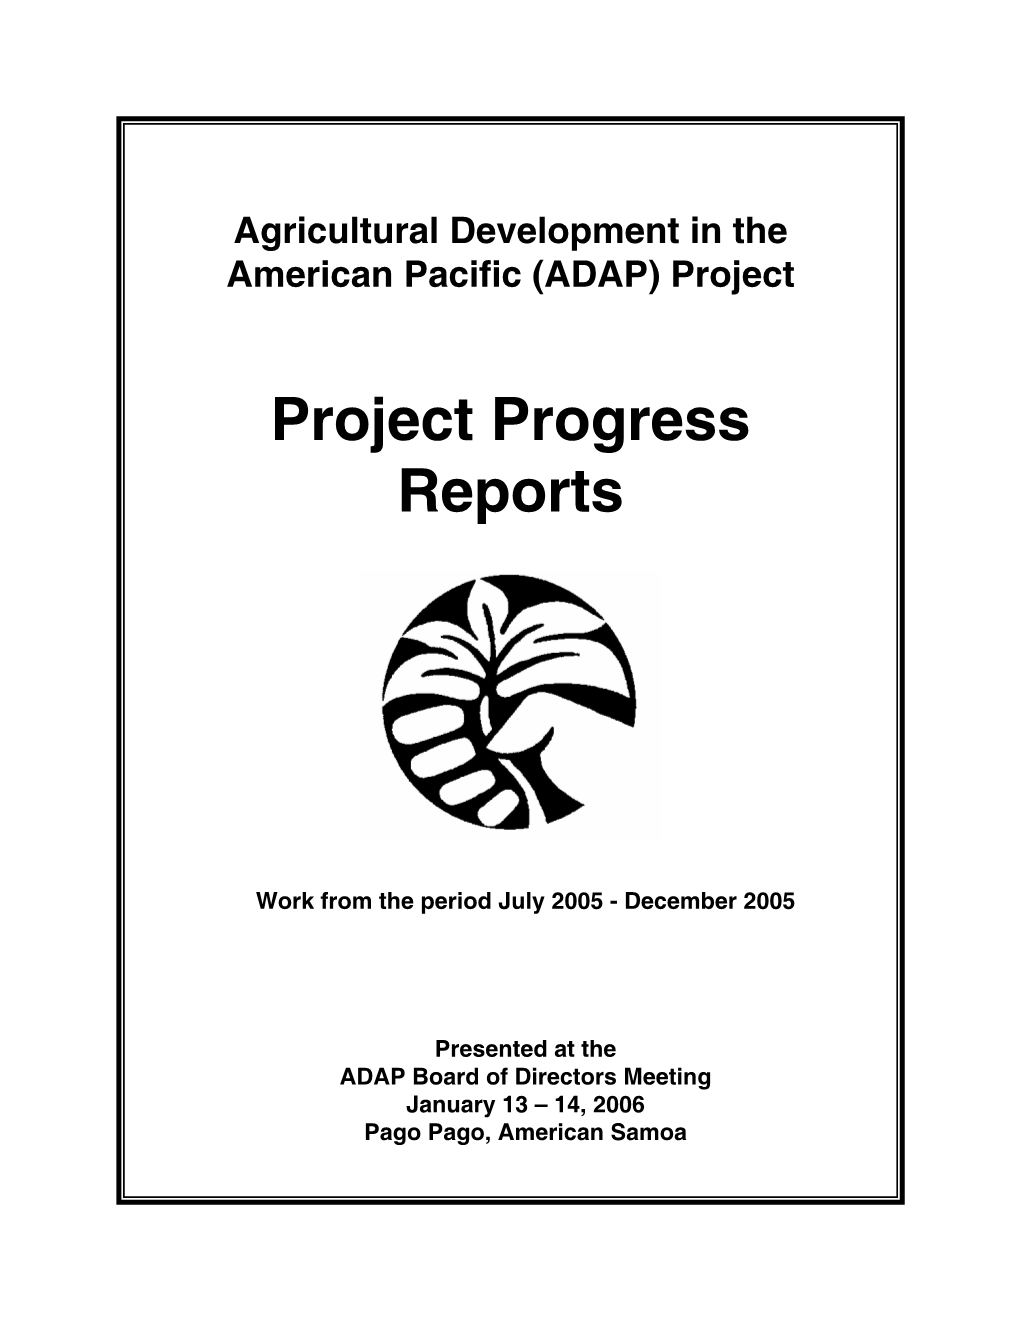 Project Progress Reports